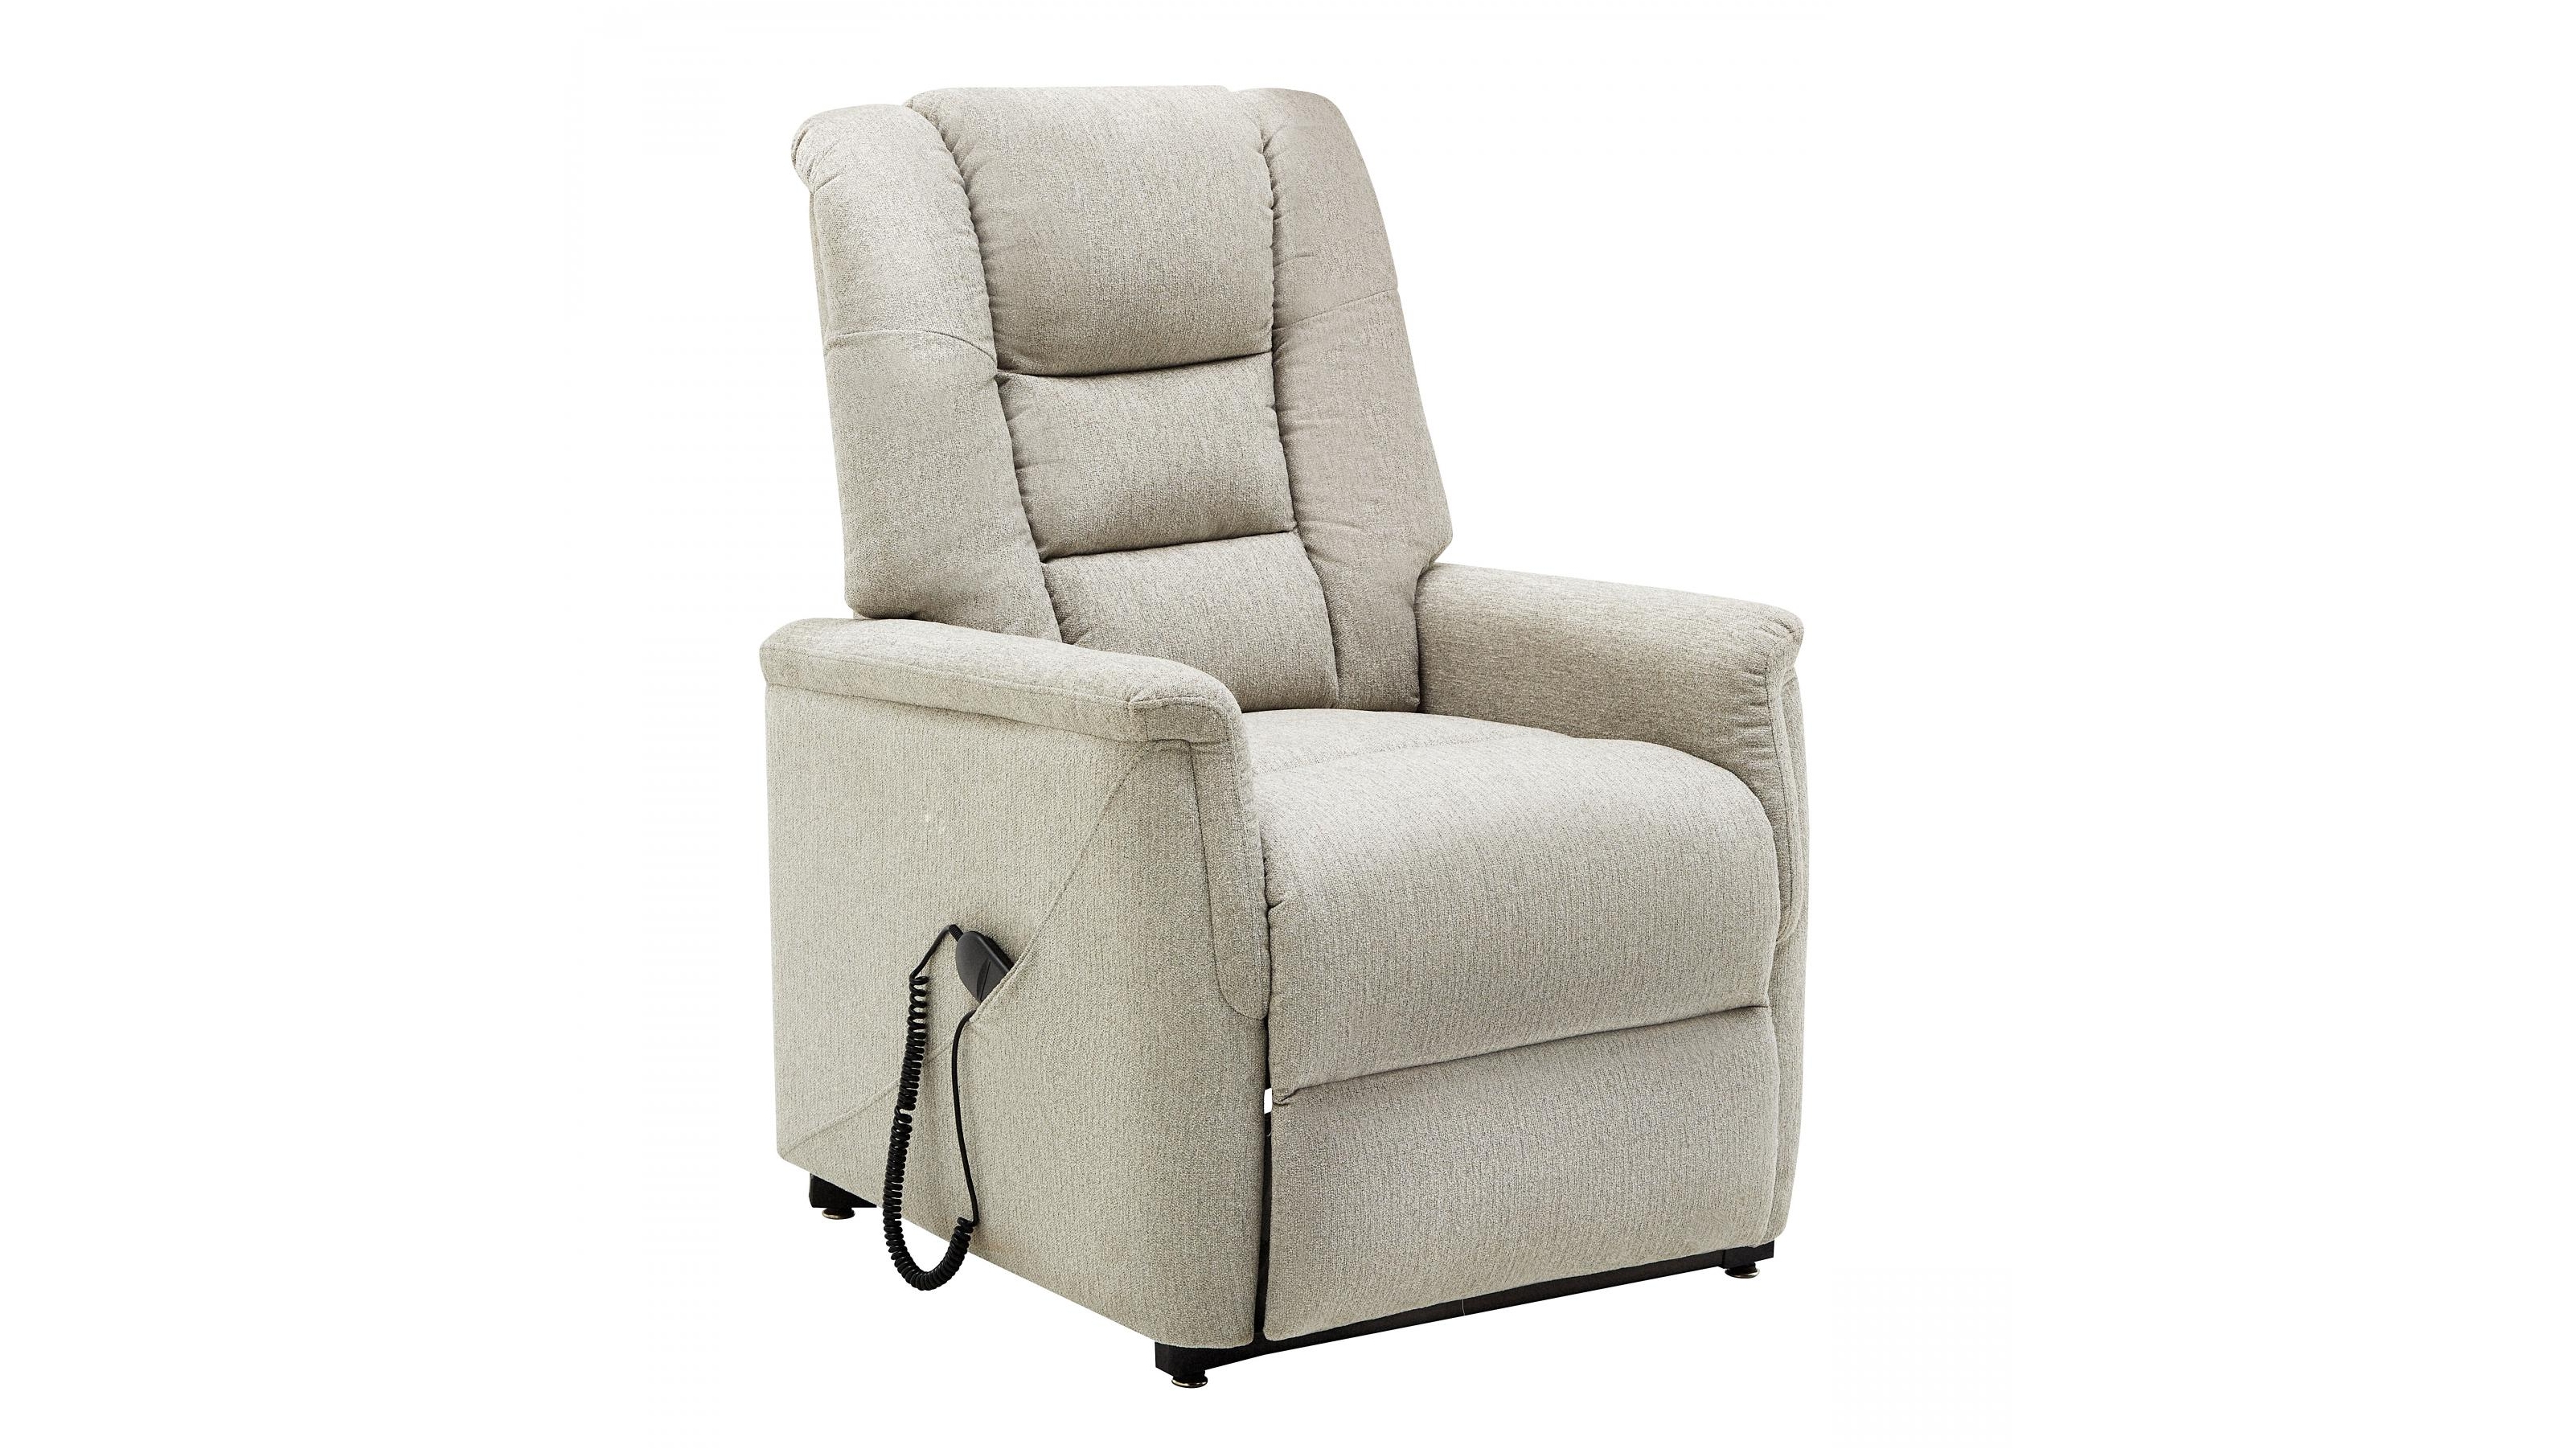 Harvey Norman Massage Chair Sale | Massage Chair